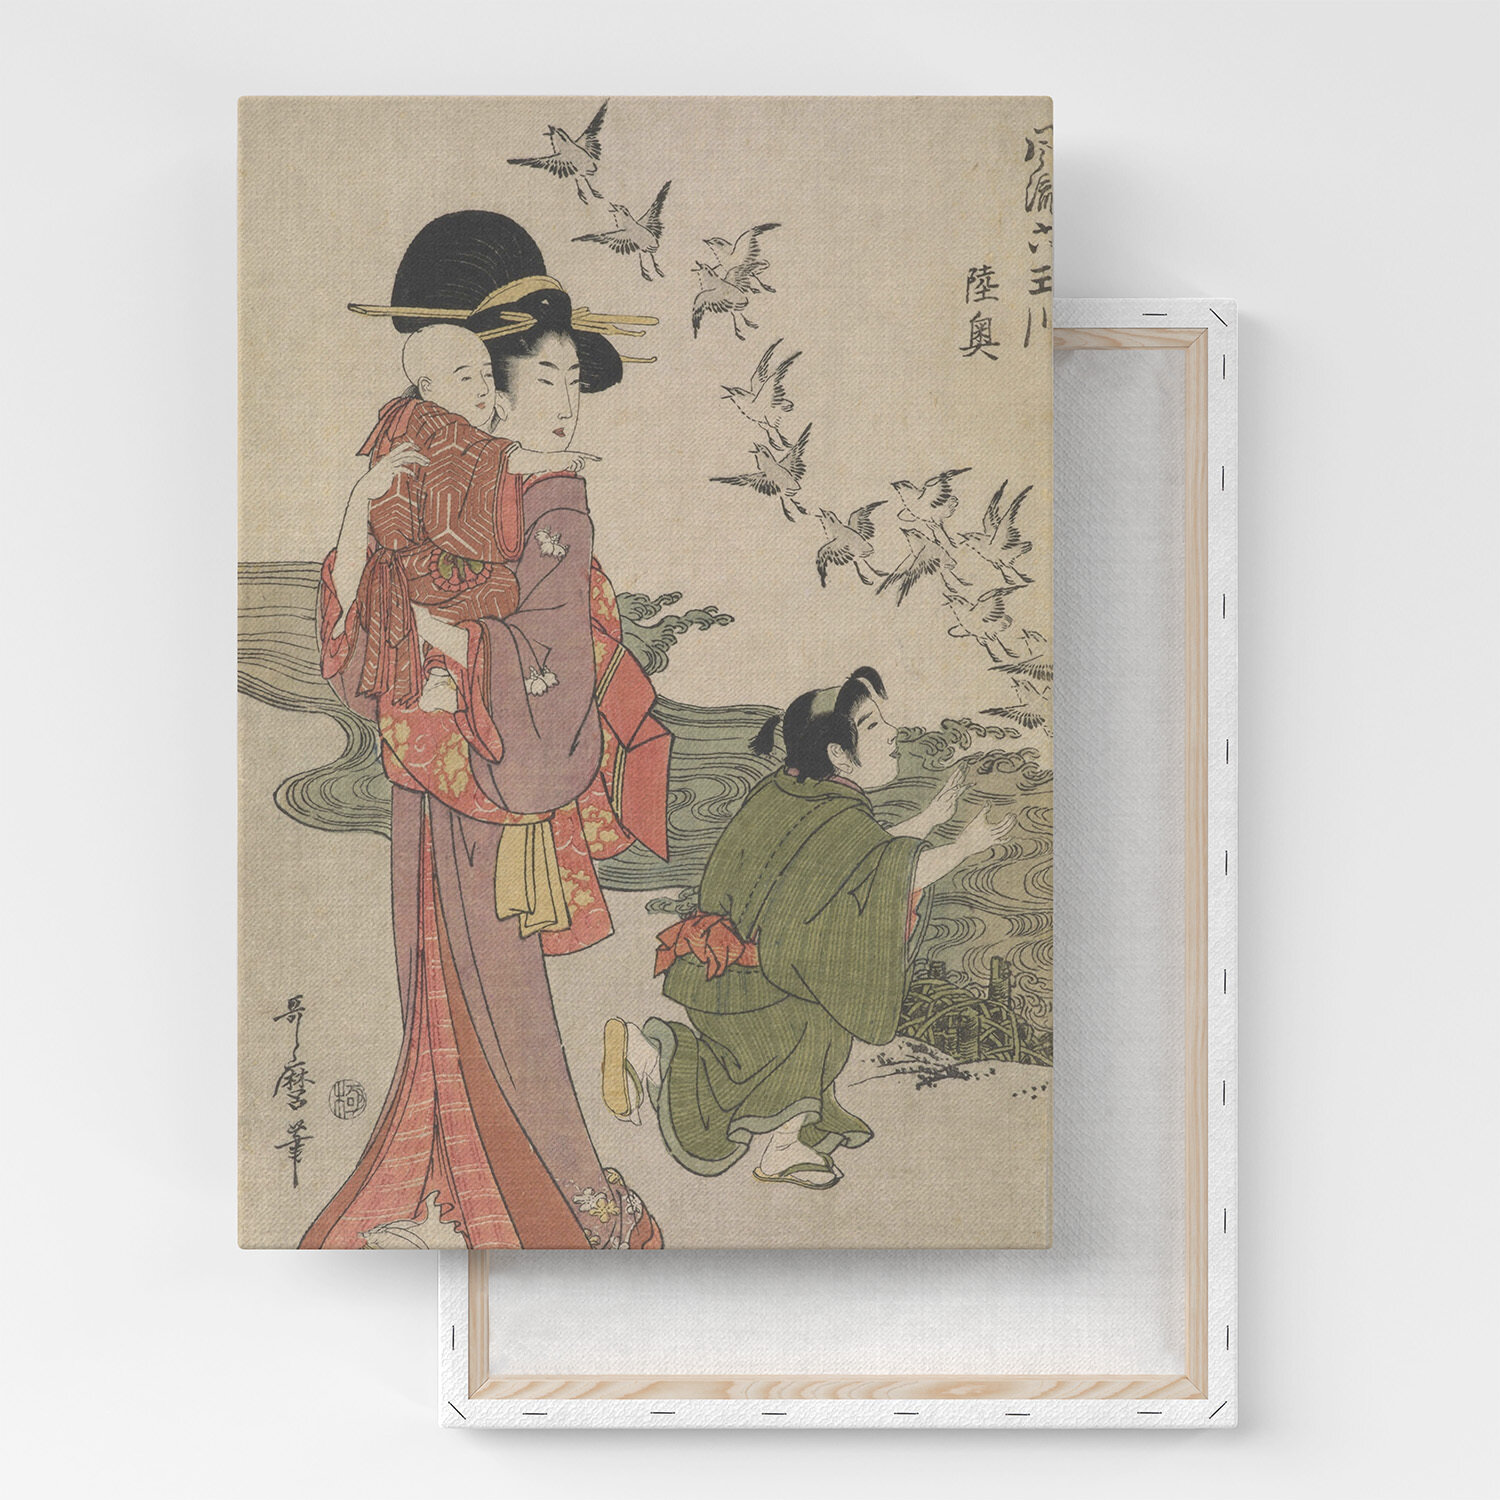 Картина на холсте, репродукция / Китагава Утамаро - Print, from the series / Размер 30 x 40 см